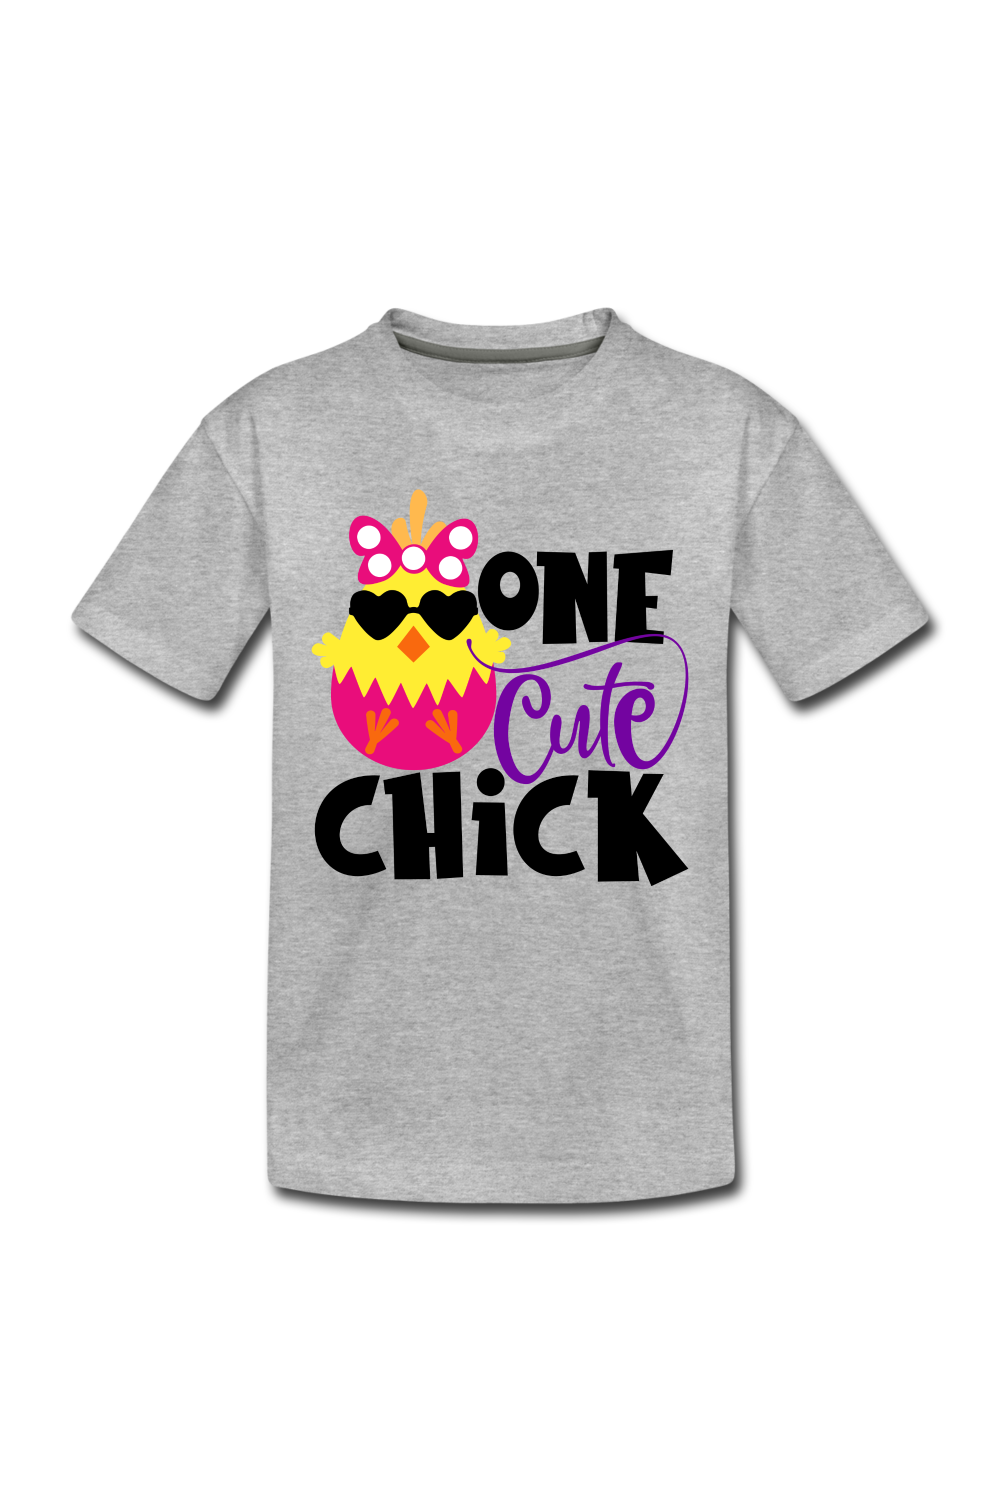 Girls Cute Chick Easter Short Sleeve T-Shirt - heather gray